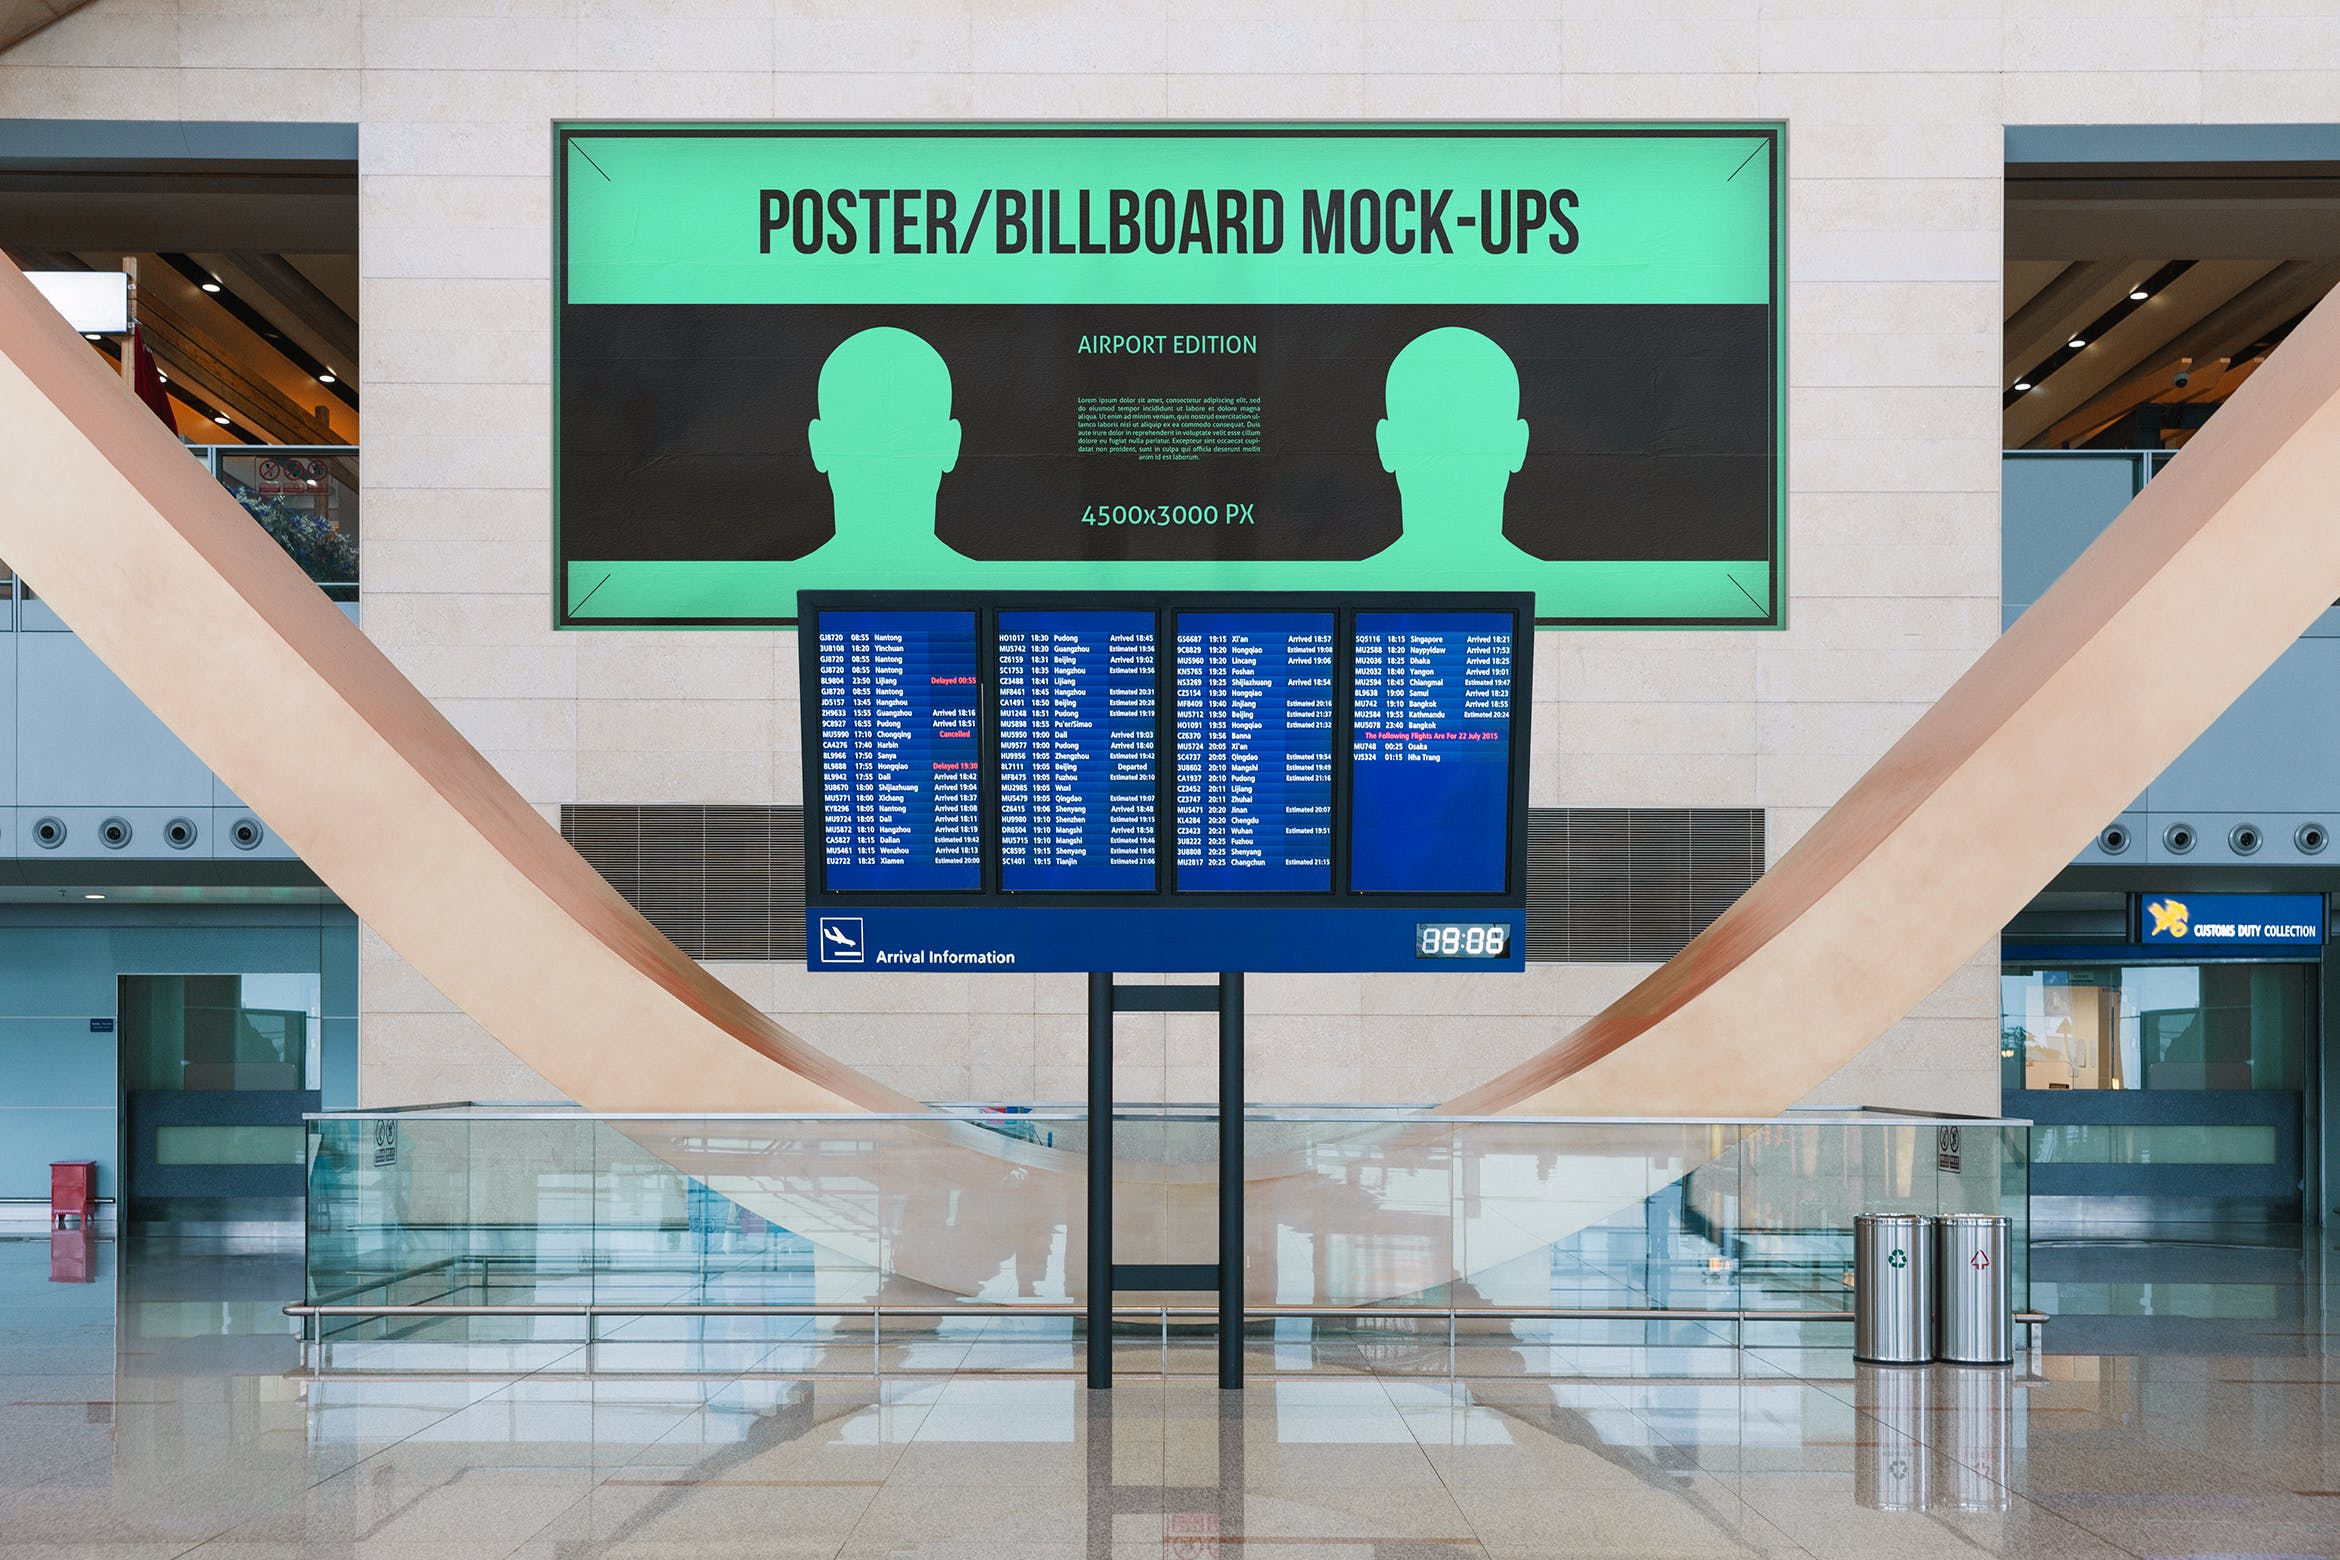 机场航班信息屏幕海报/广告牌样机非凡图库精选模板#7 Poster / Billboard Mock-ups – Airport Edition #7插图